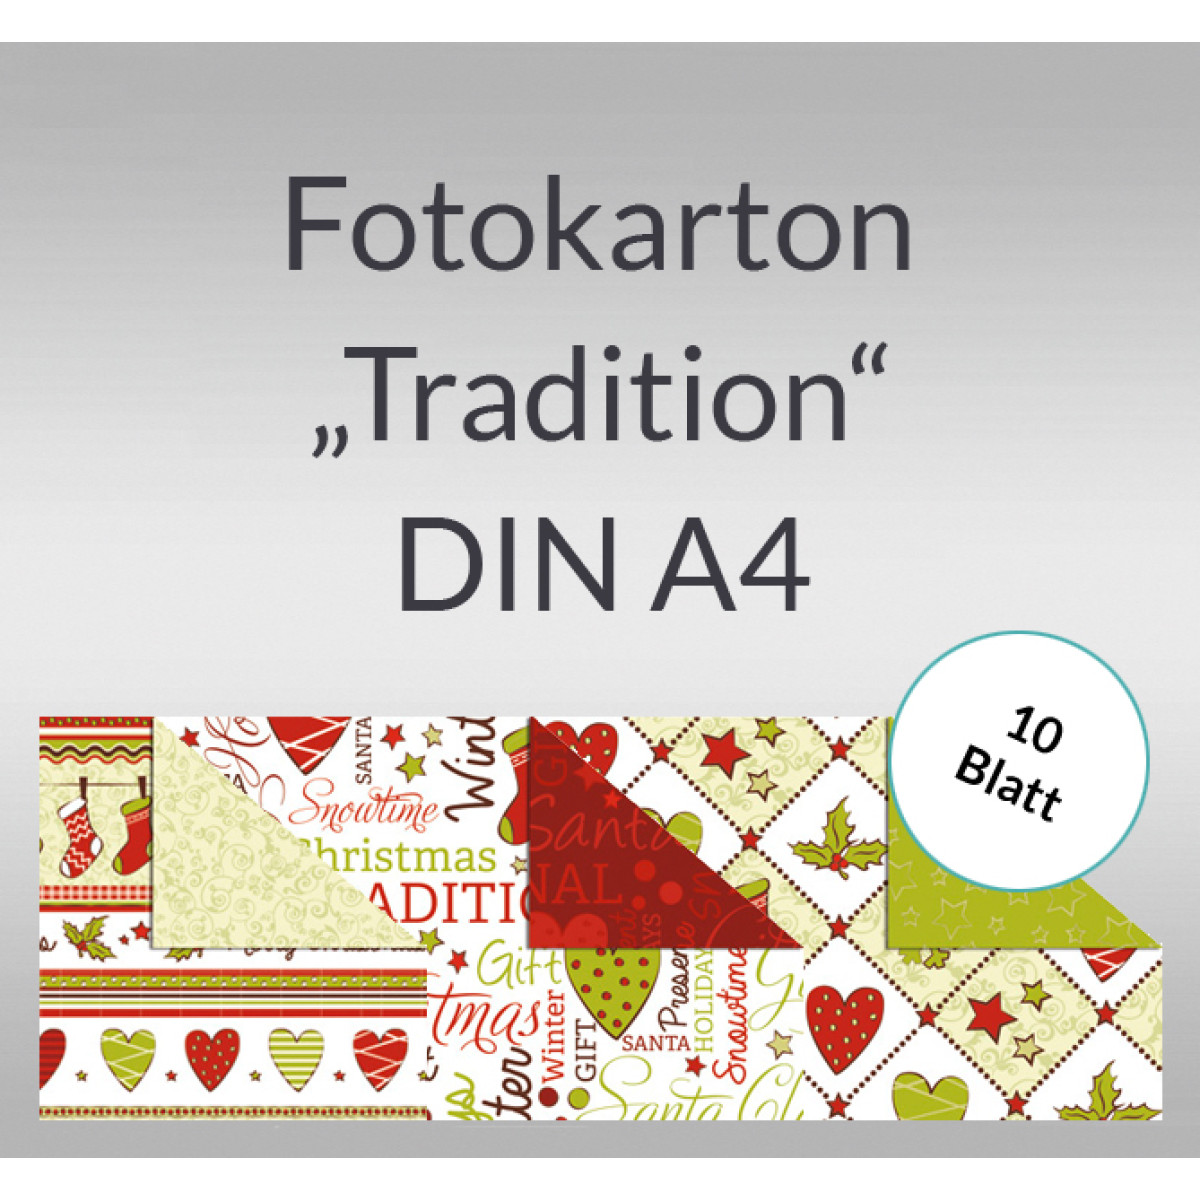 Fotokarton Weihnachten "Tradition" DIN A4 - 10 Blatt